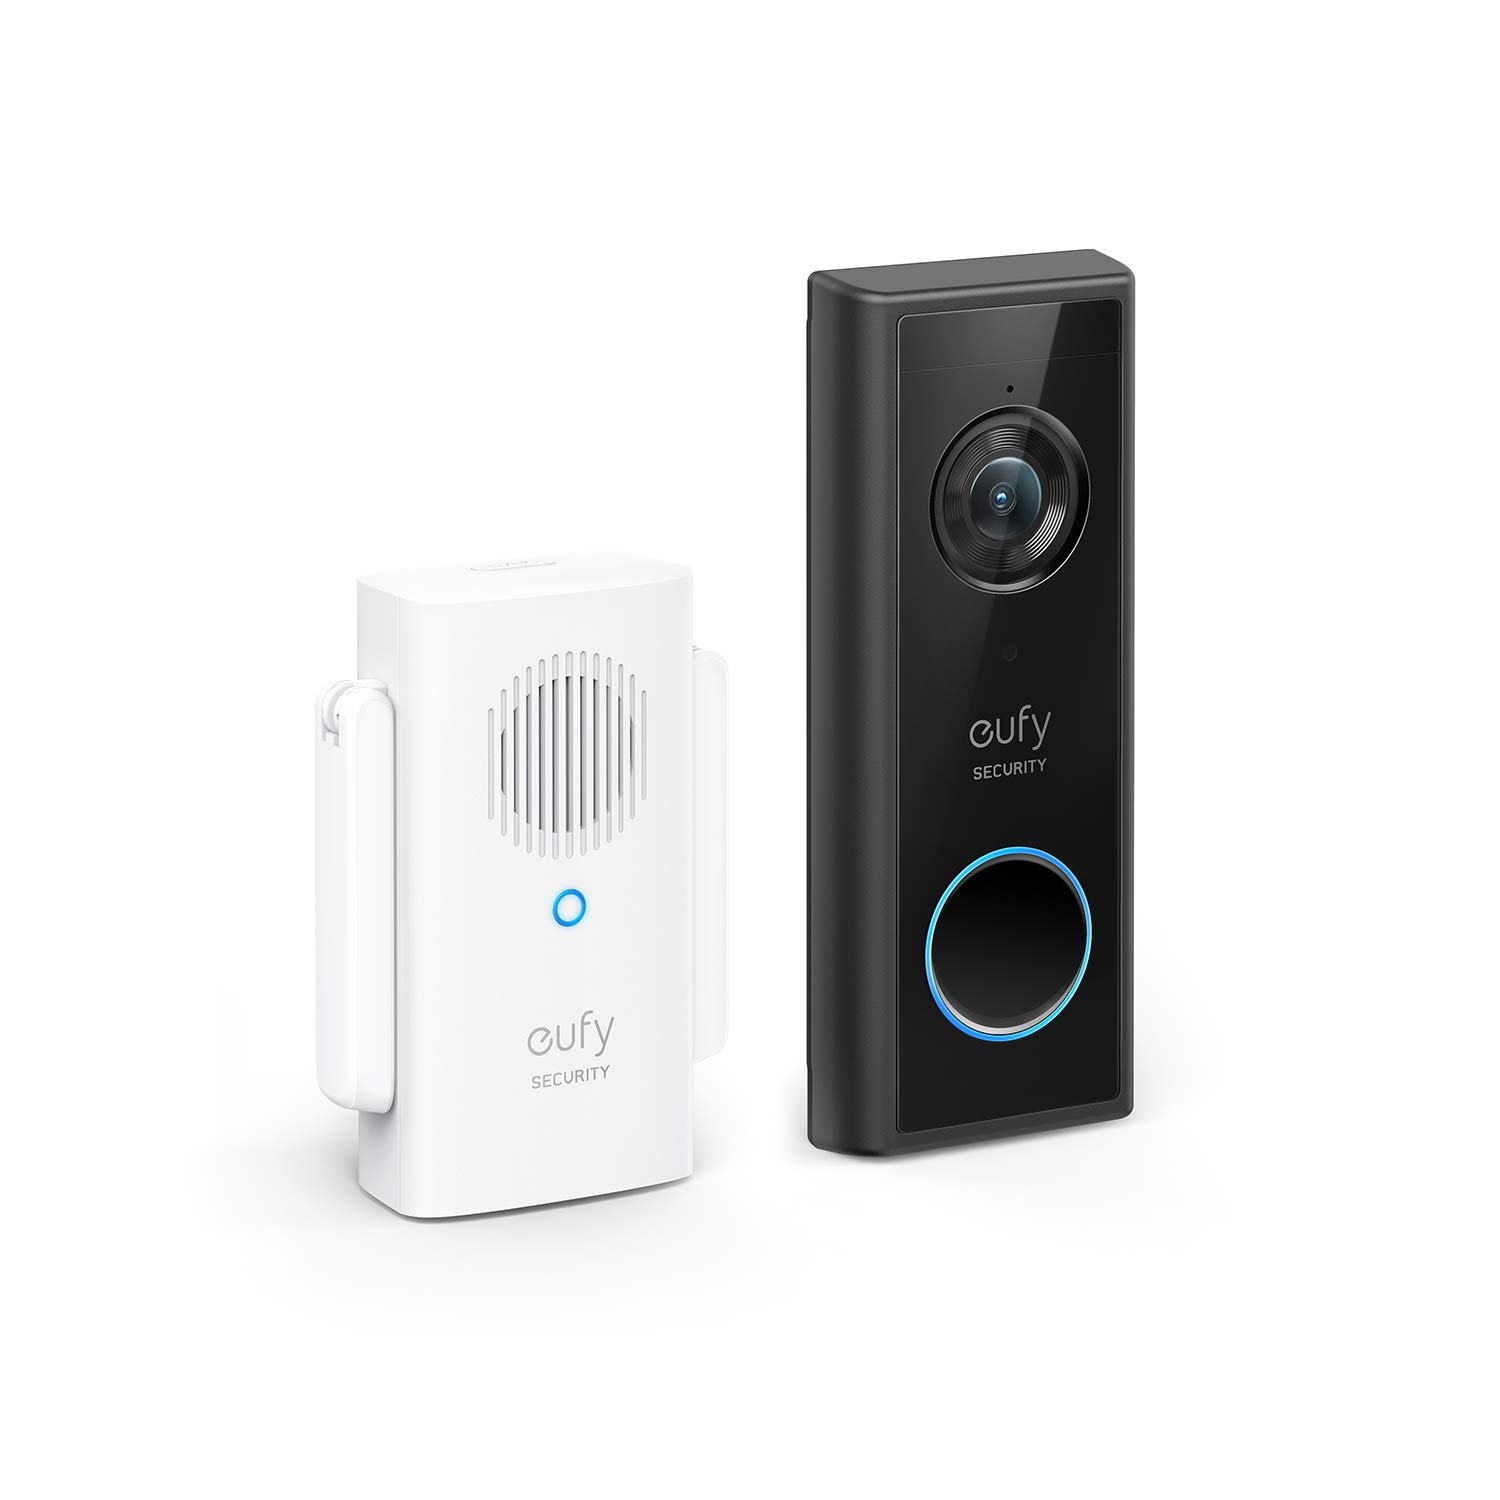 eufy 1080p Wi-Fi Video Doorbell (Battery) w/ Wireless Chime $65 + Free Shipping